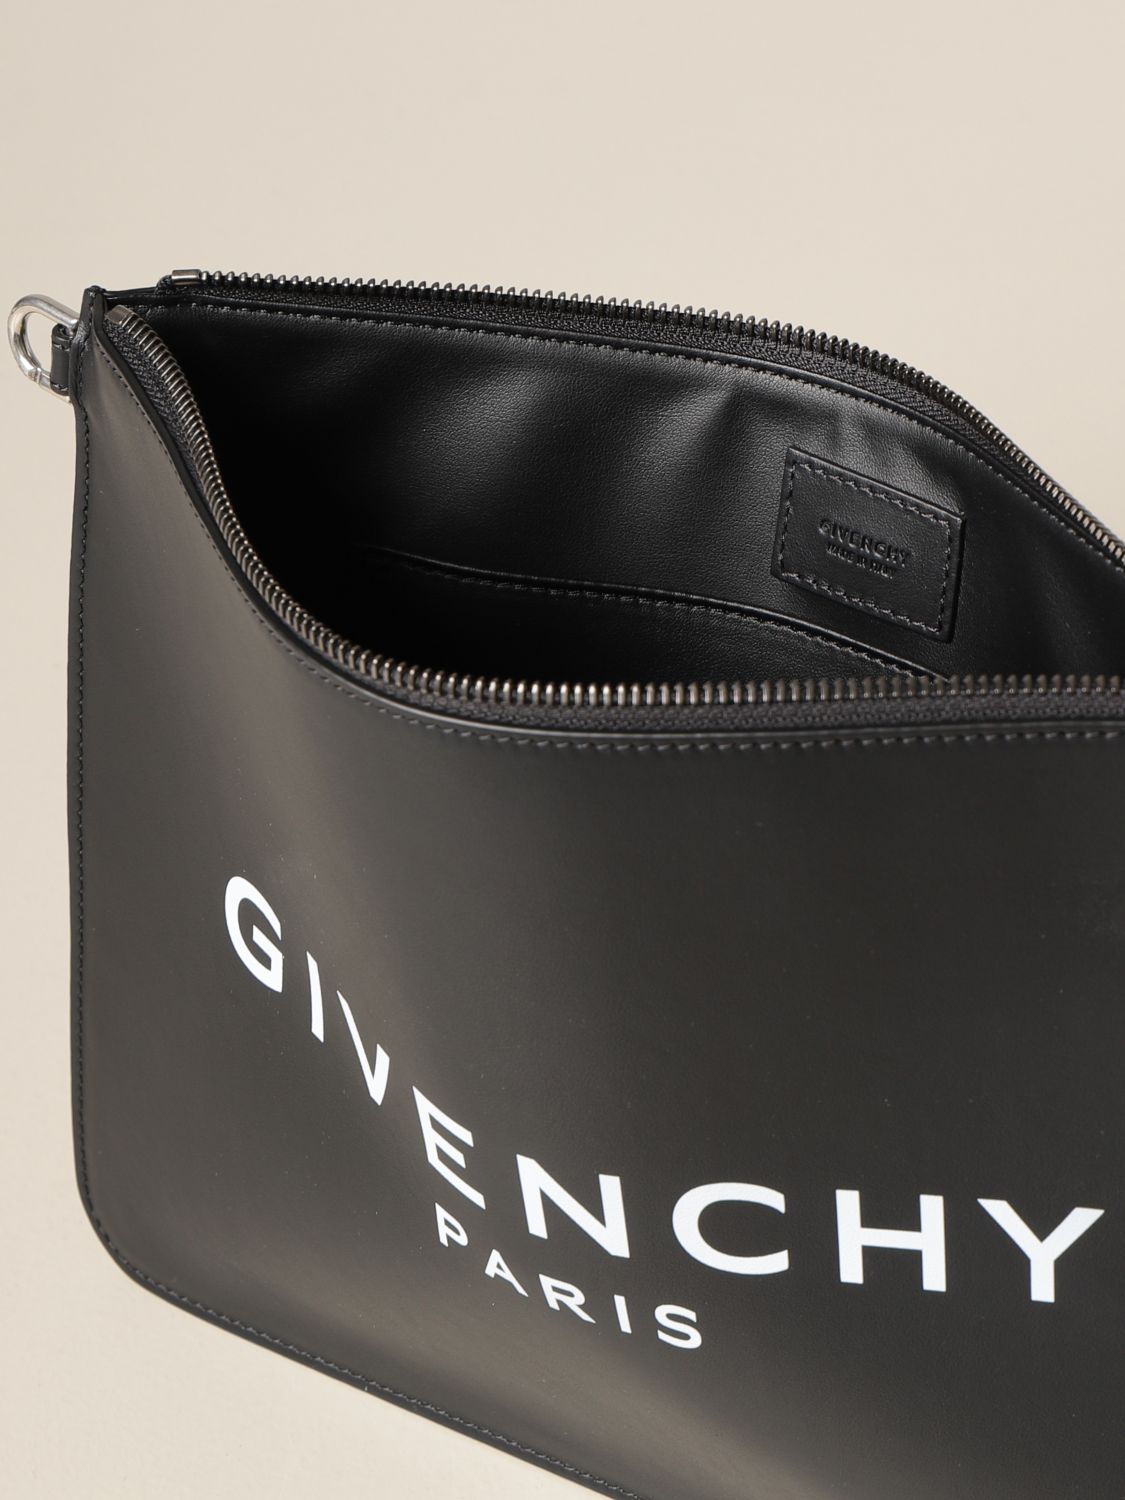 givenchy clutch bag